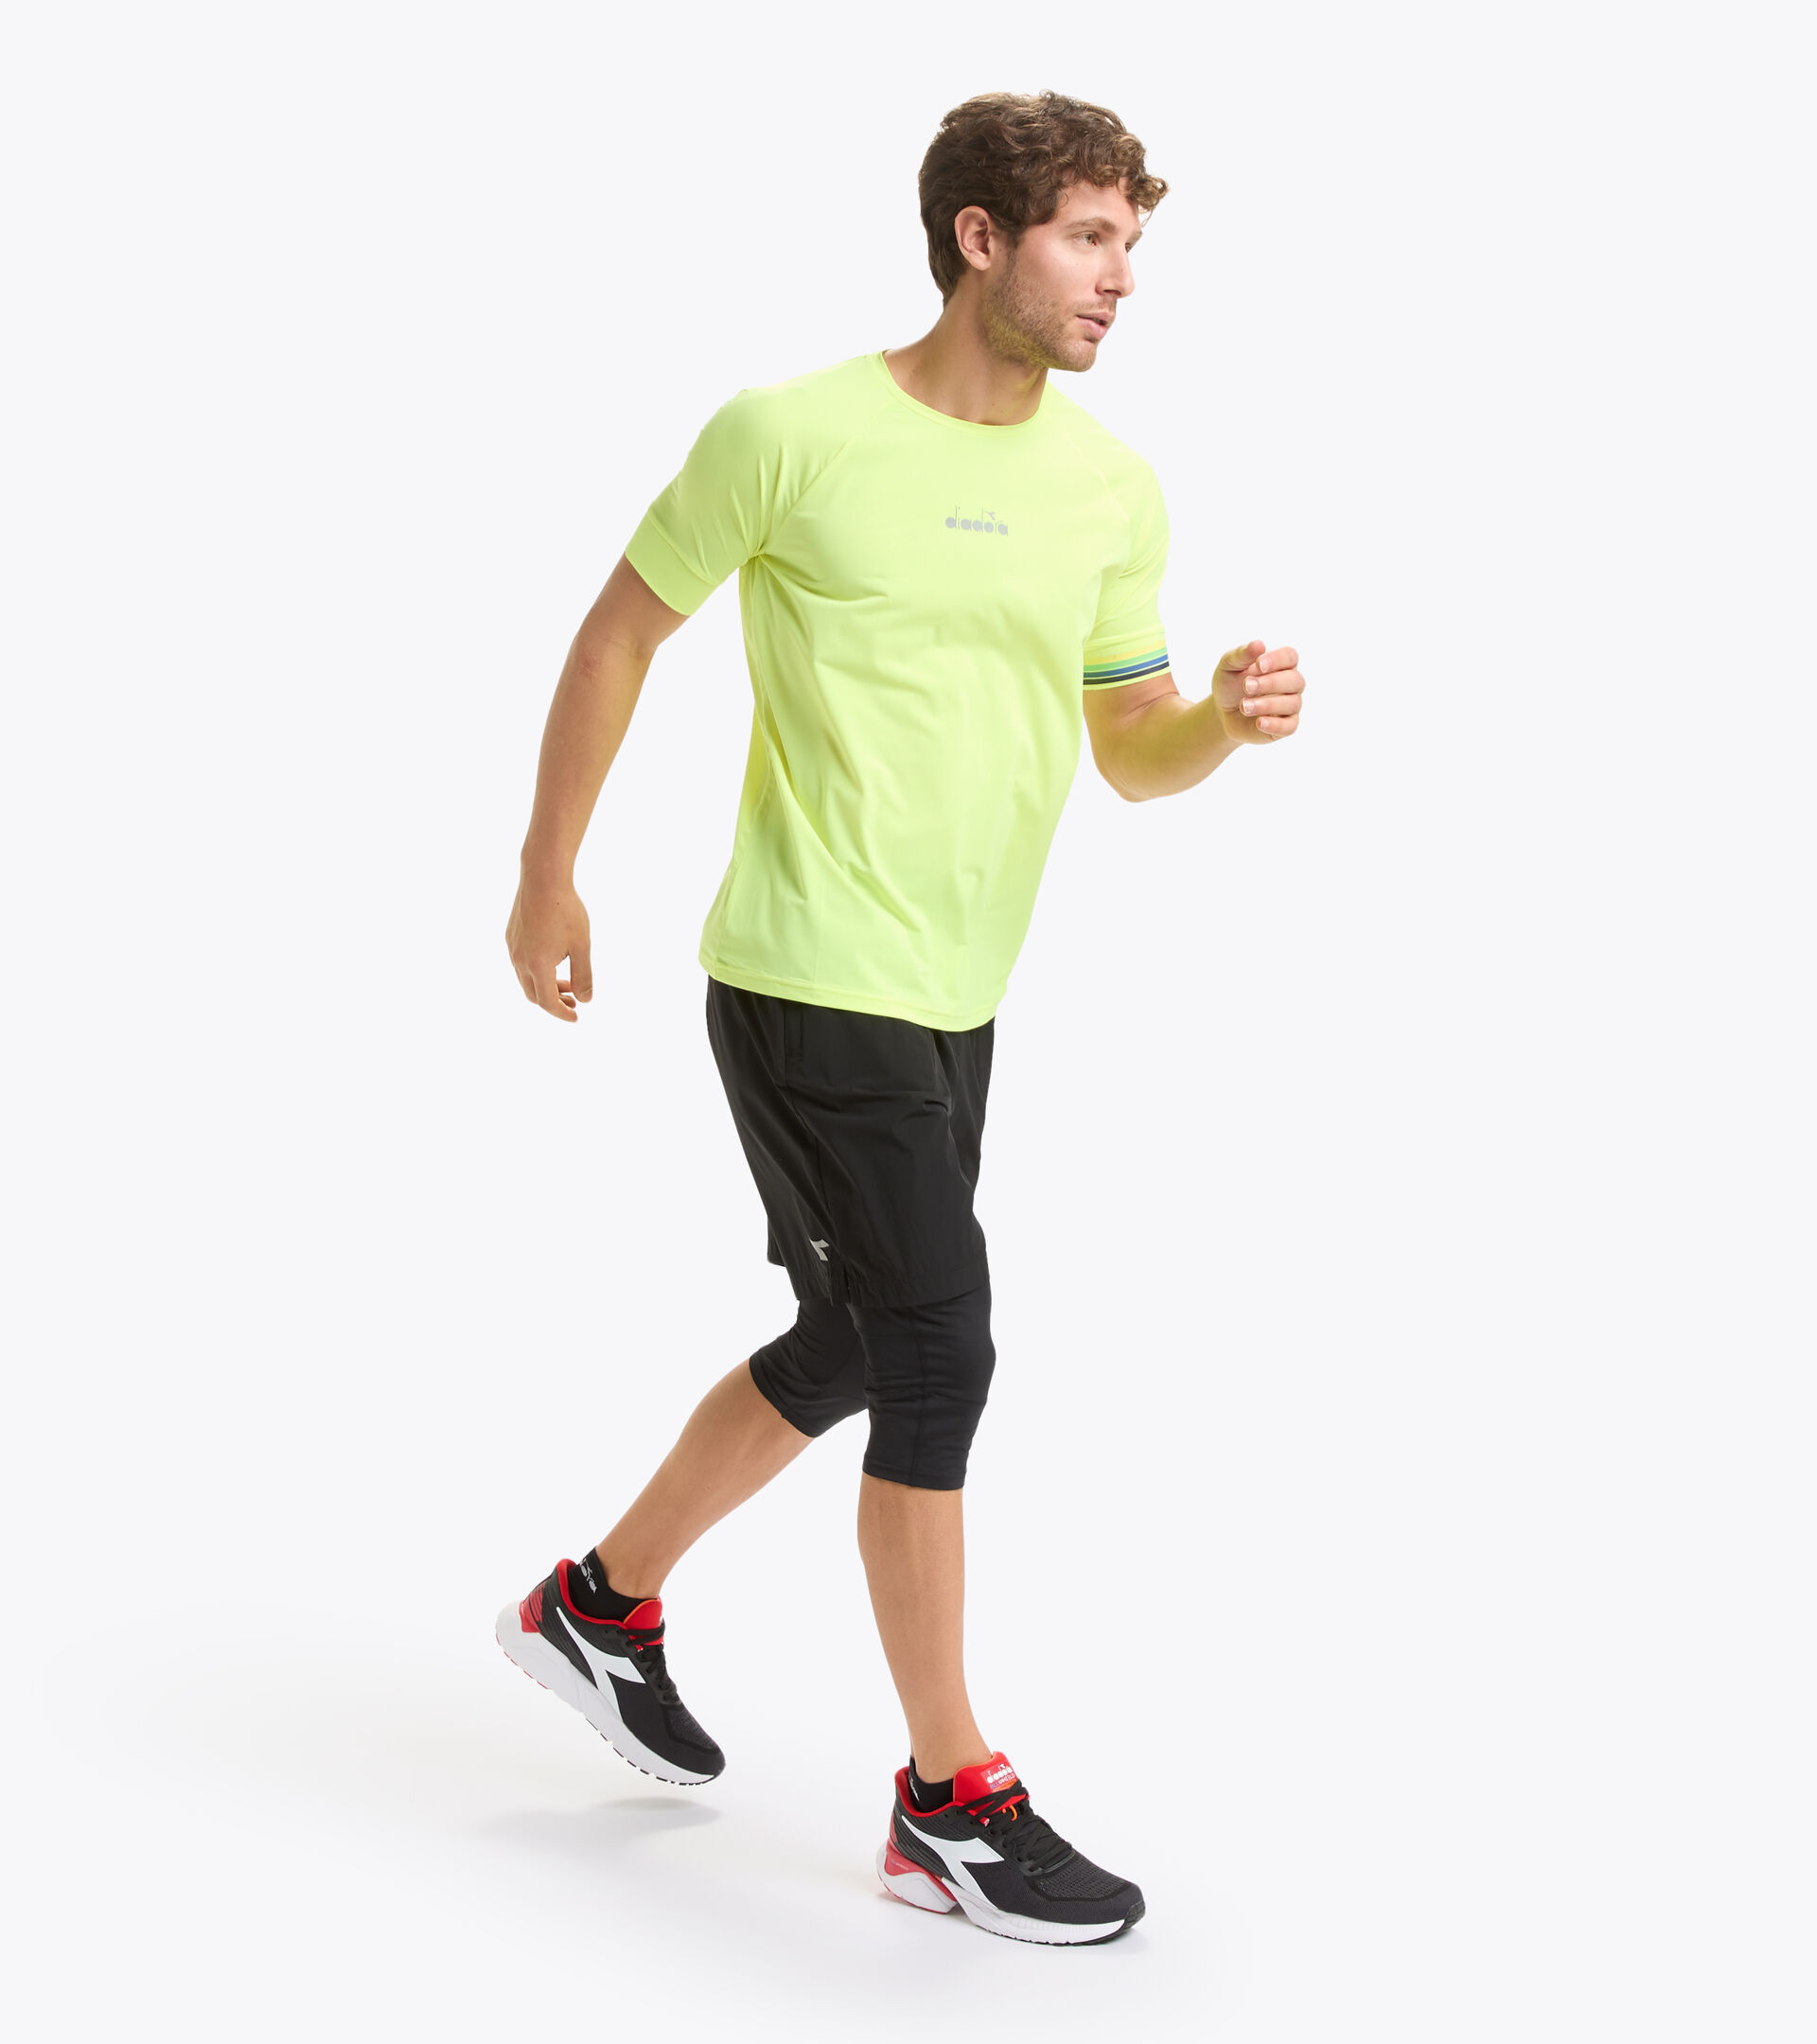 POWER SHORTS BE Men detachable Online ONE shorts with set Diadora Leggings Store running - GR 